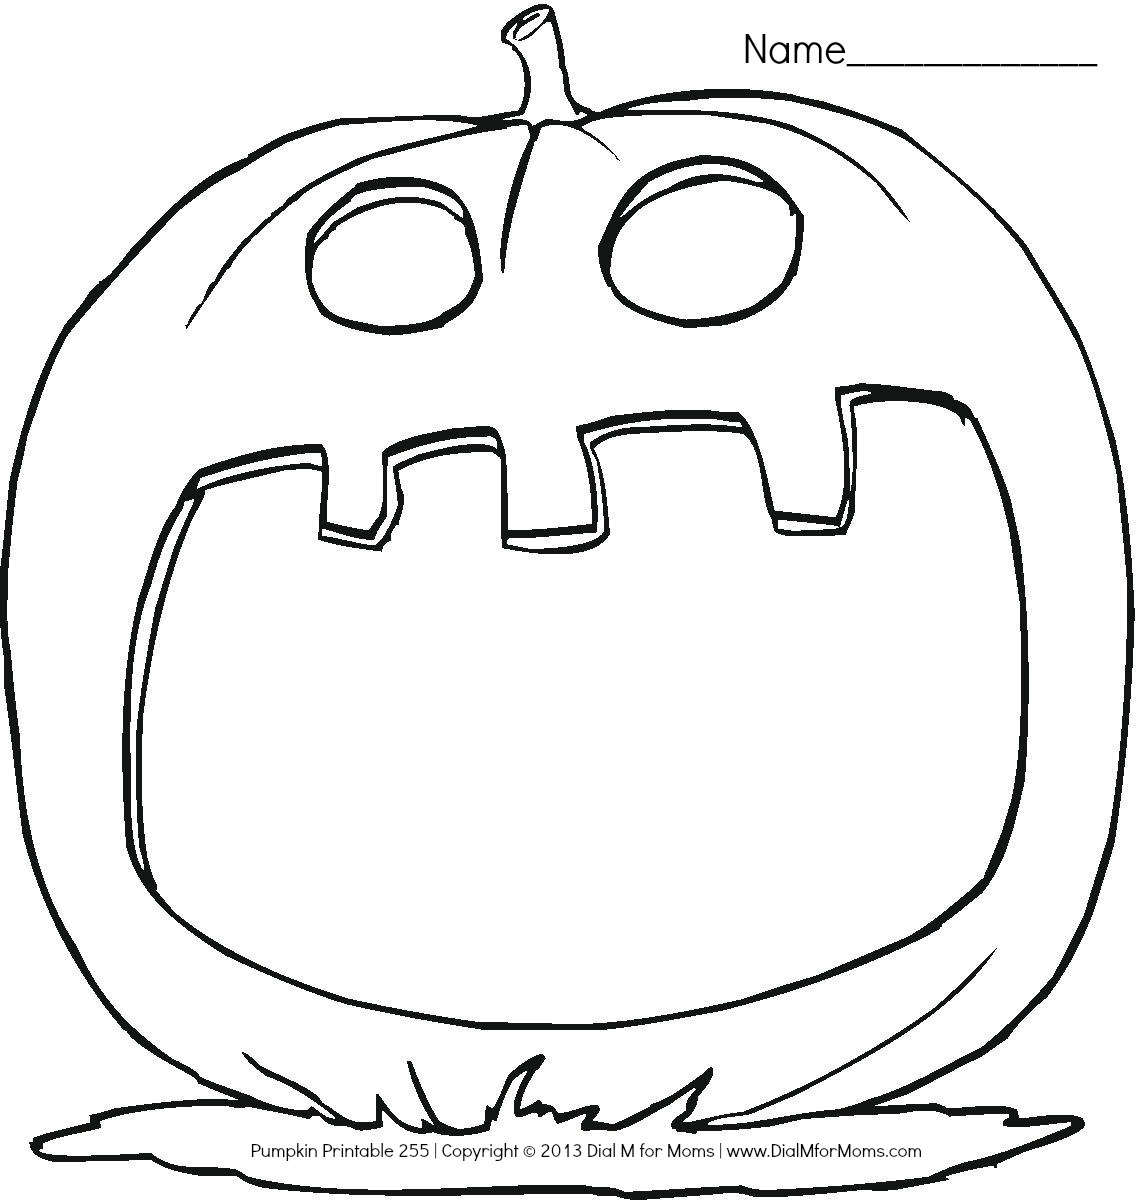 Pumpkin Line Drawing.